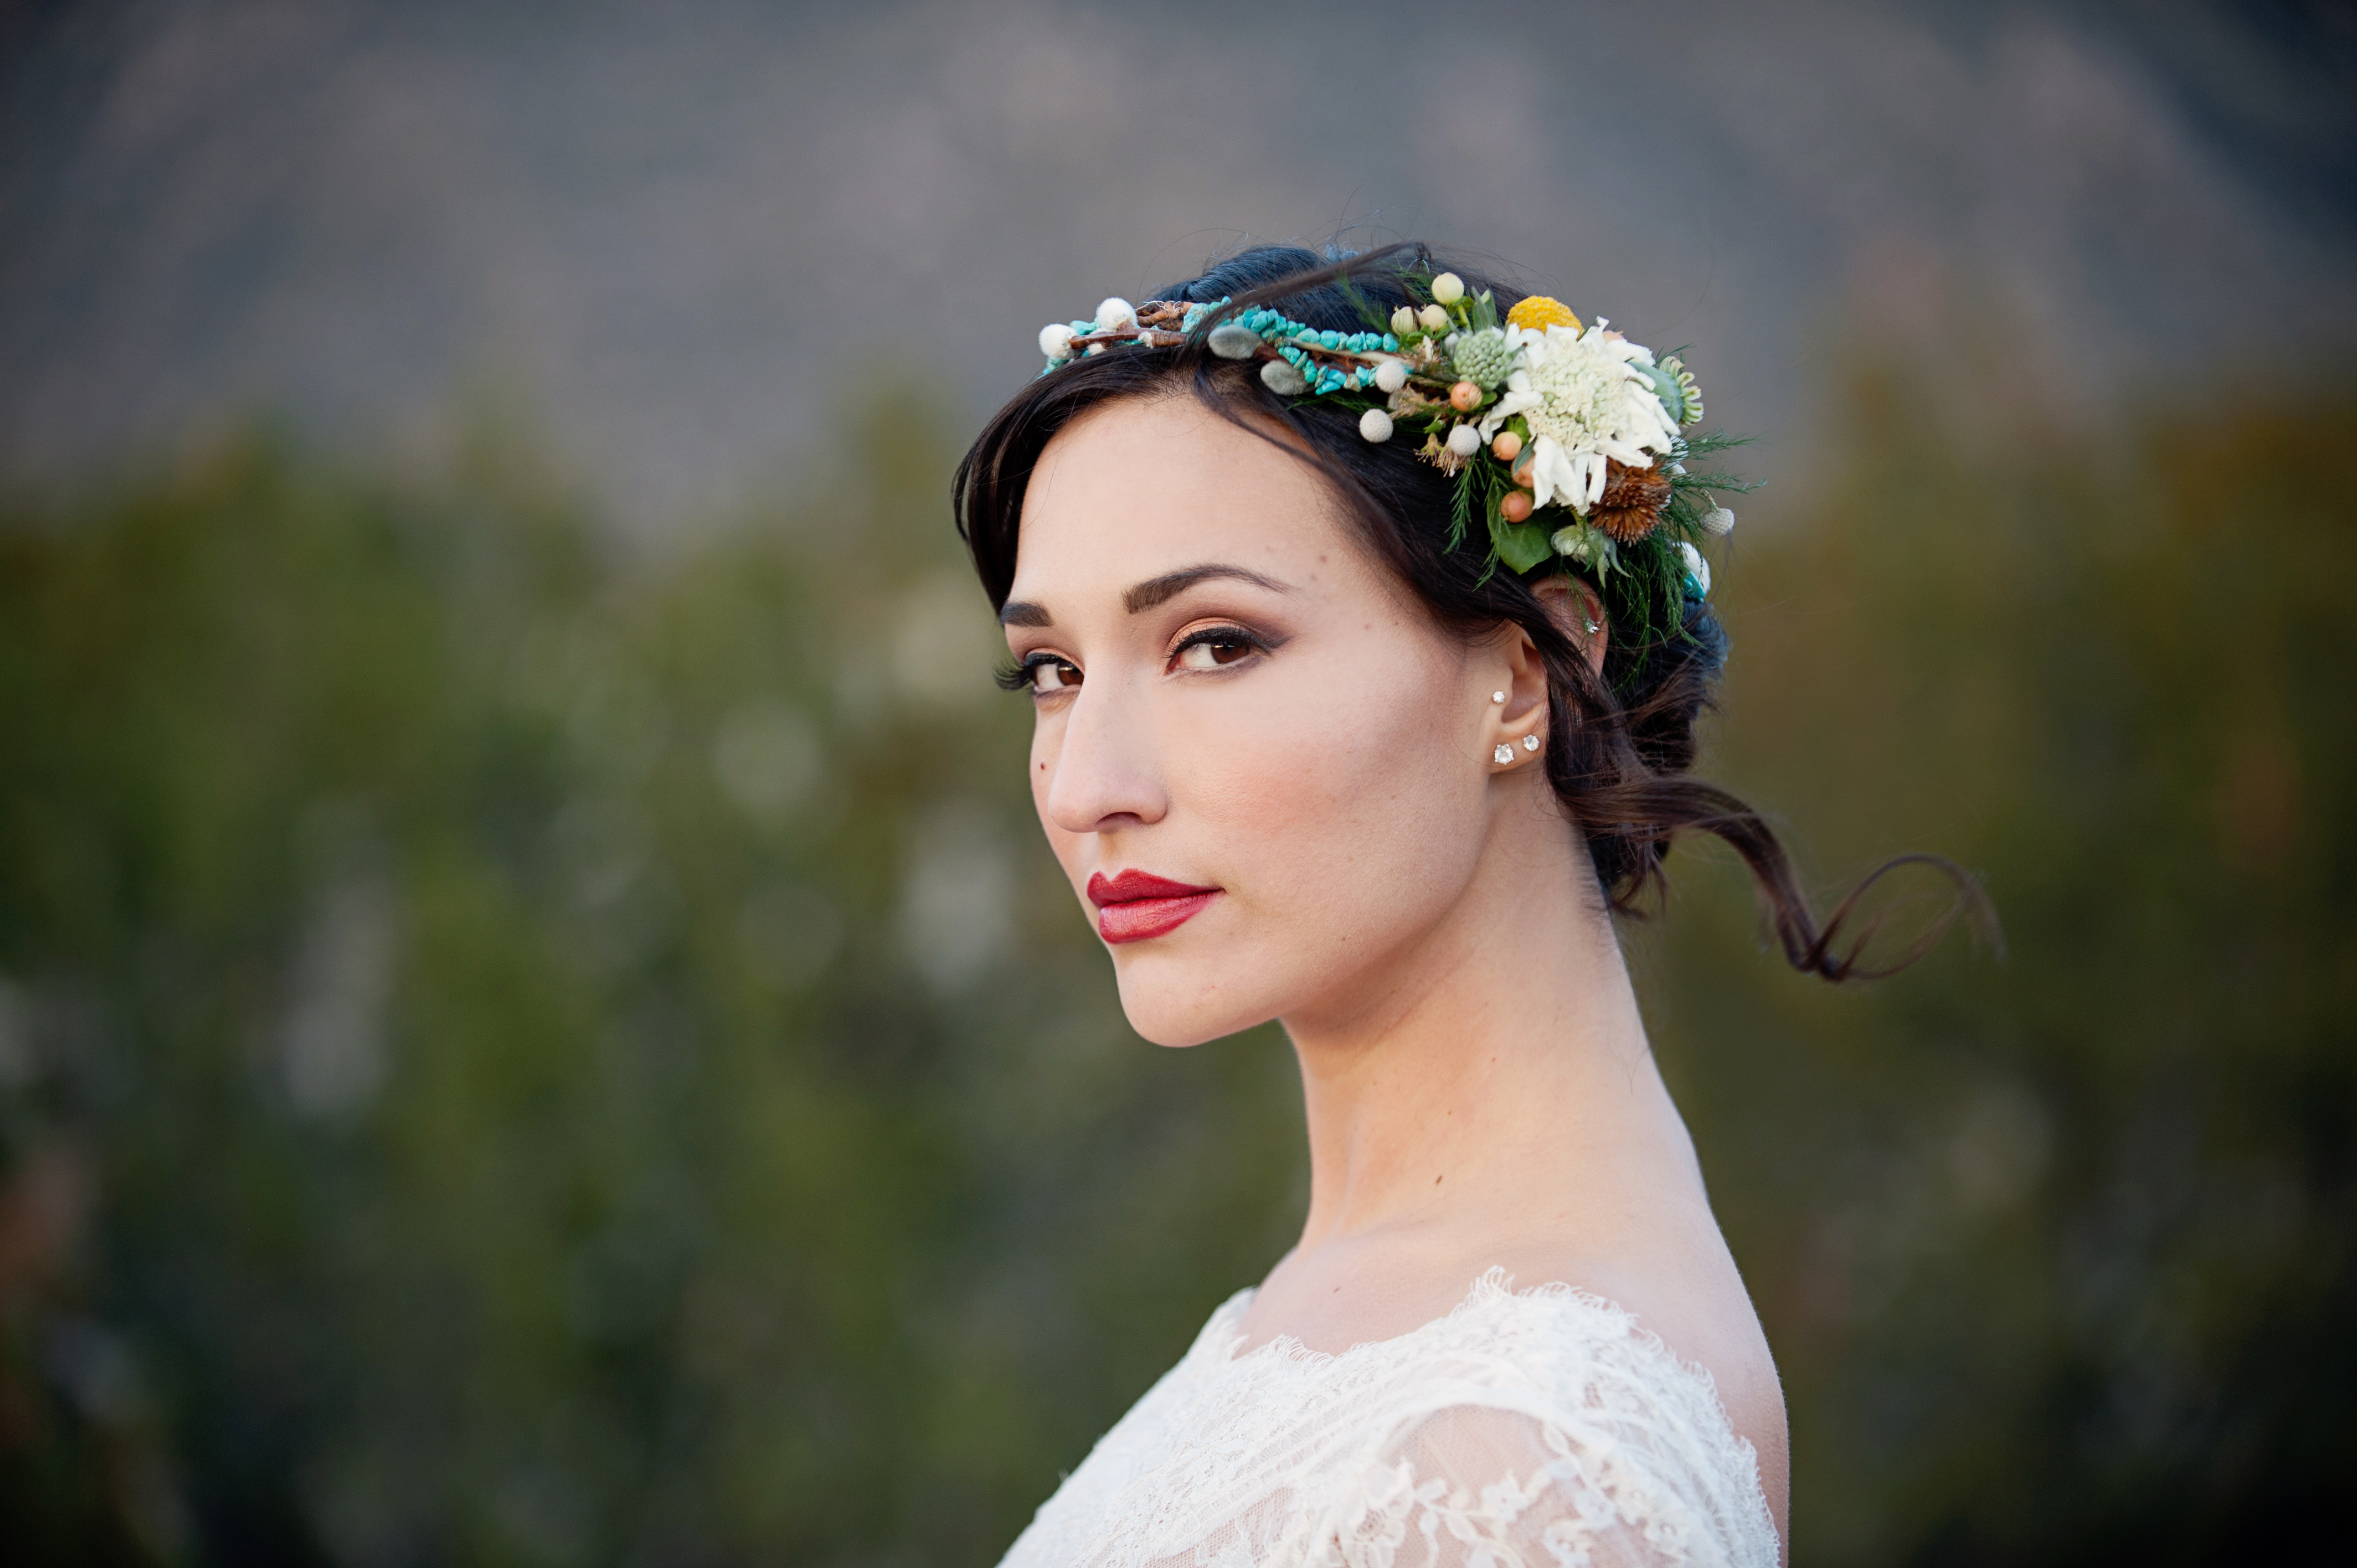 Hair+Makeup: Genica Lee, Makeup Artist Floral: Stephanie Yardman Floral Design Dress: Bridal Elegance By Darlene